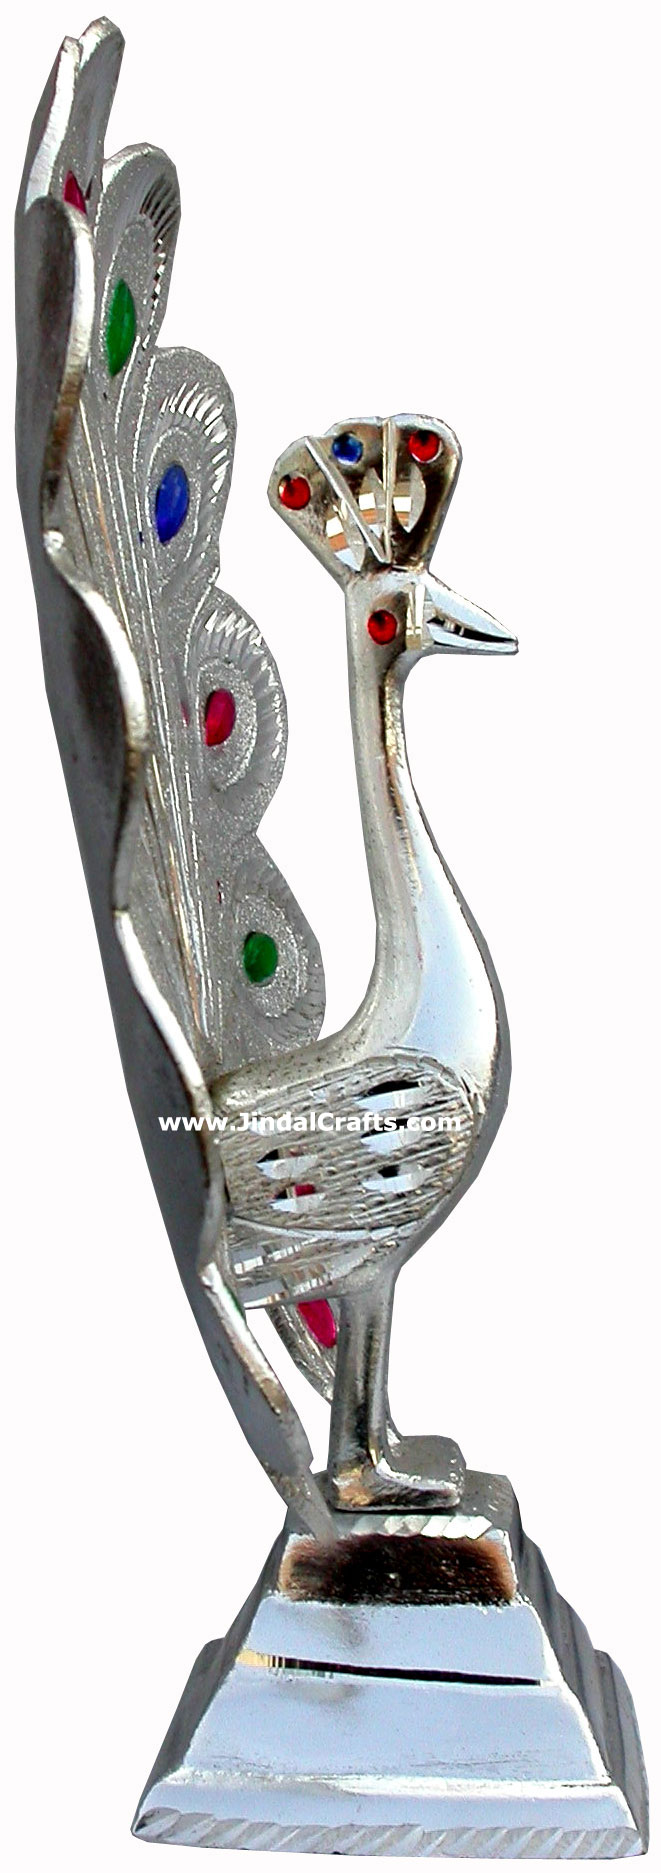 Peacock Figure - Hand Carved Indian Art Craft Handicraft Home Decor Figurine